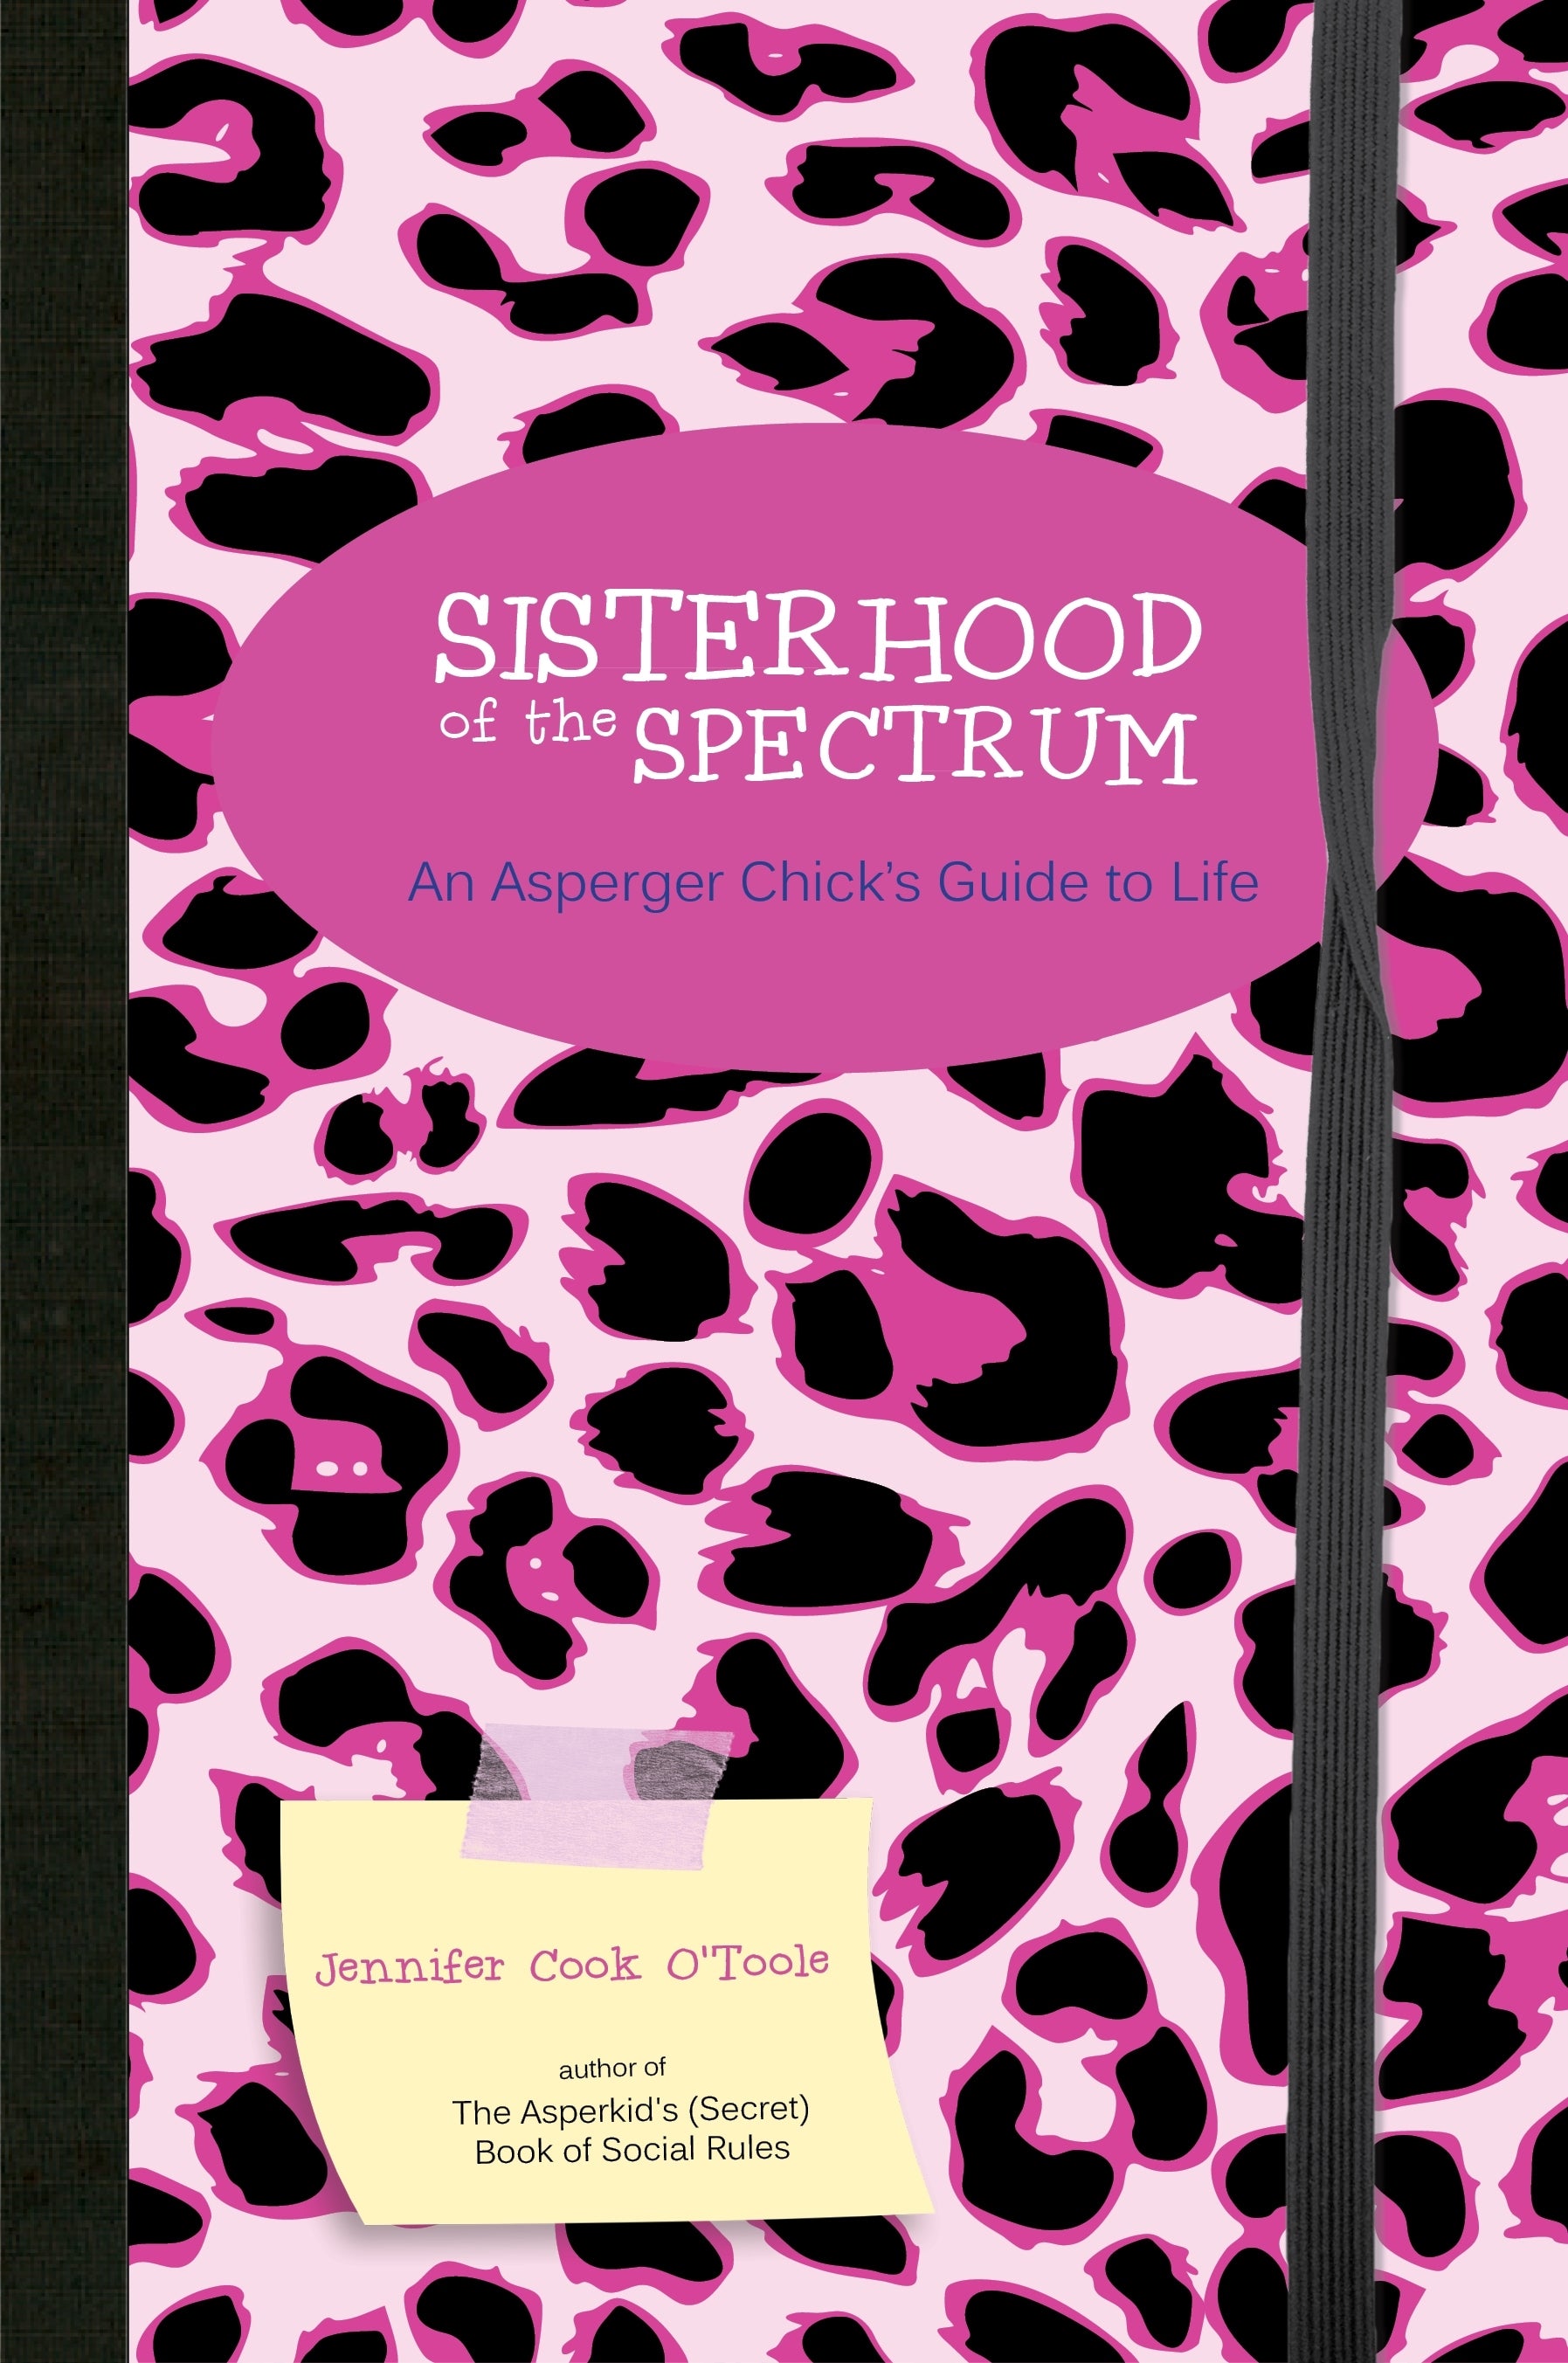 Sisterhood of the Spectrum by Jennifer Cook, Anne-Louise Richards